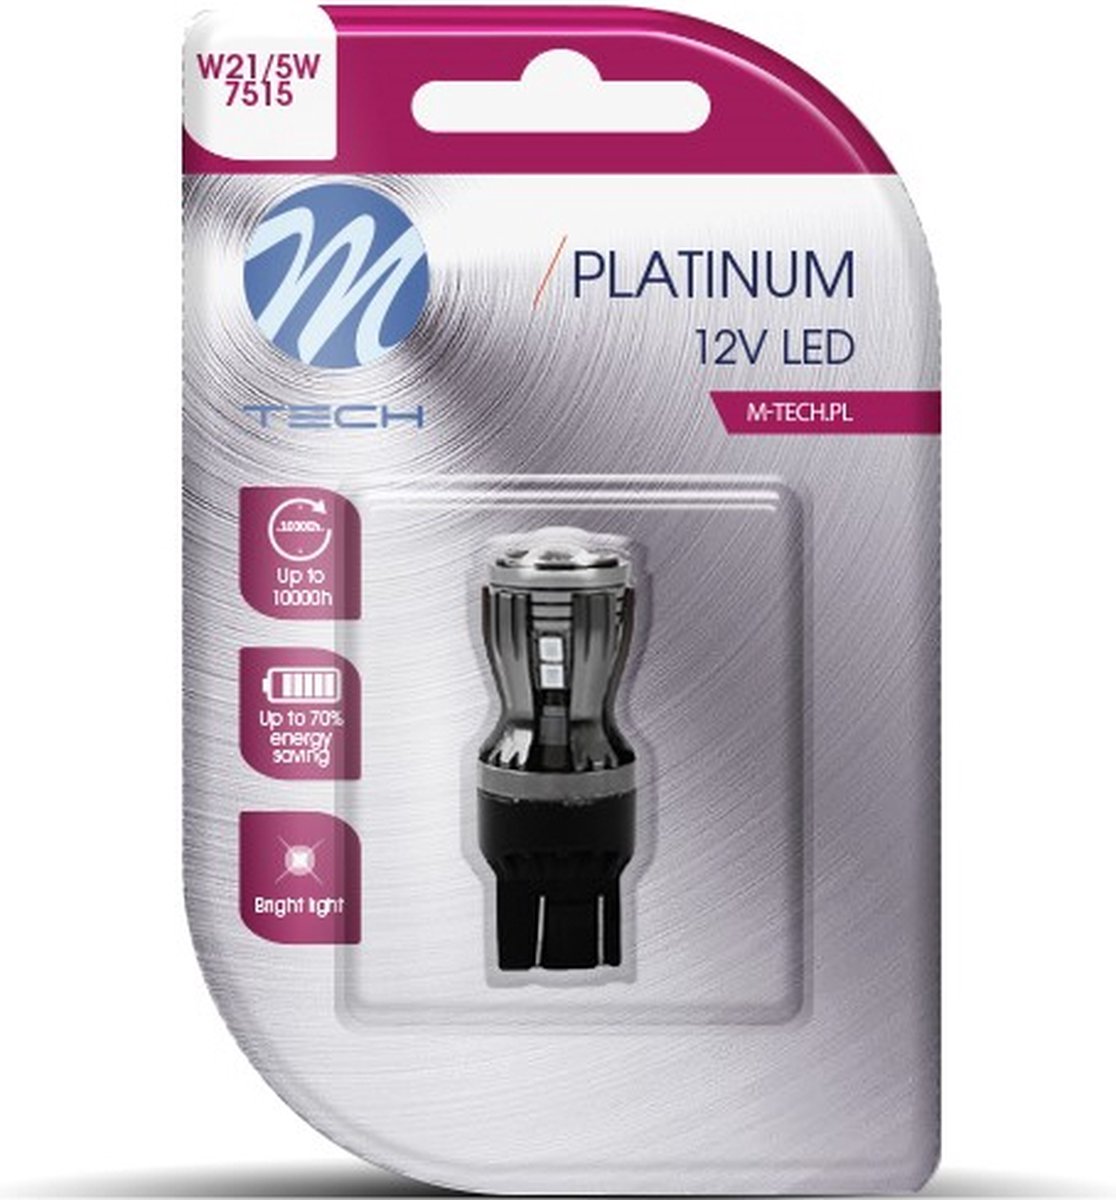 M-Tech LED - W21/5W 12V - Platinum - Canbus - 14x Led diode - Rood